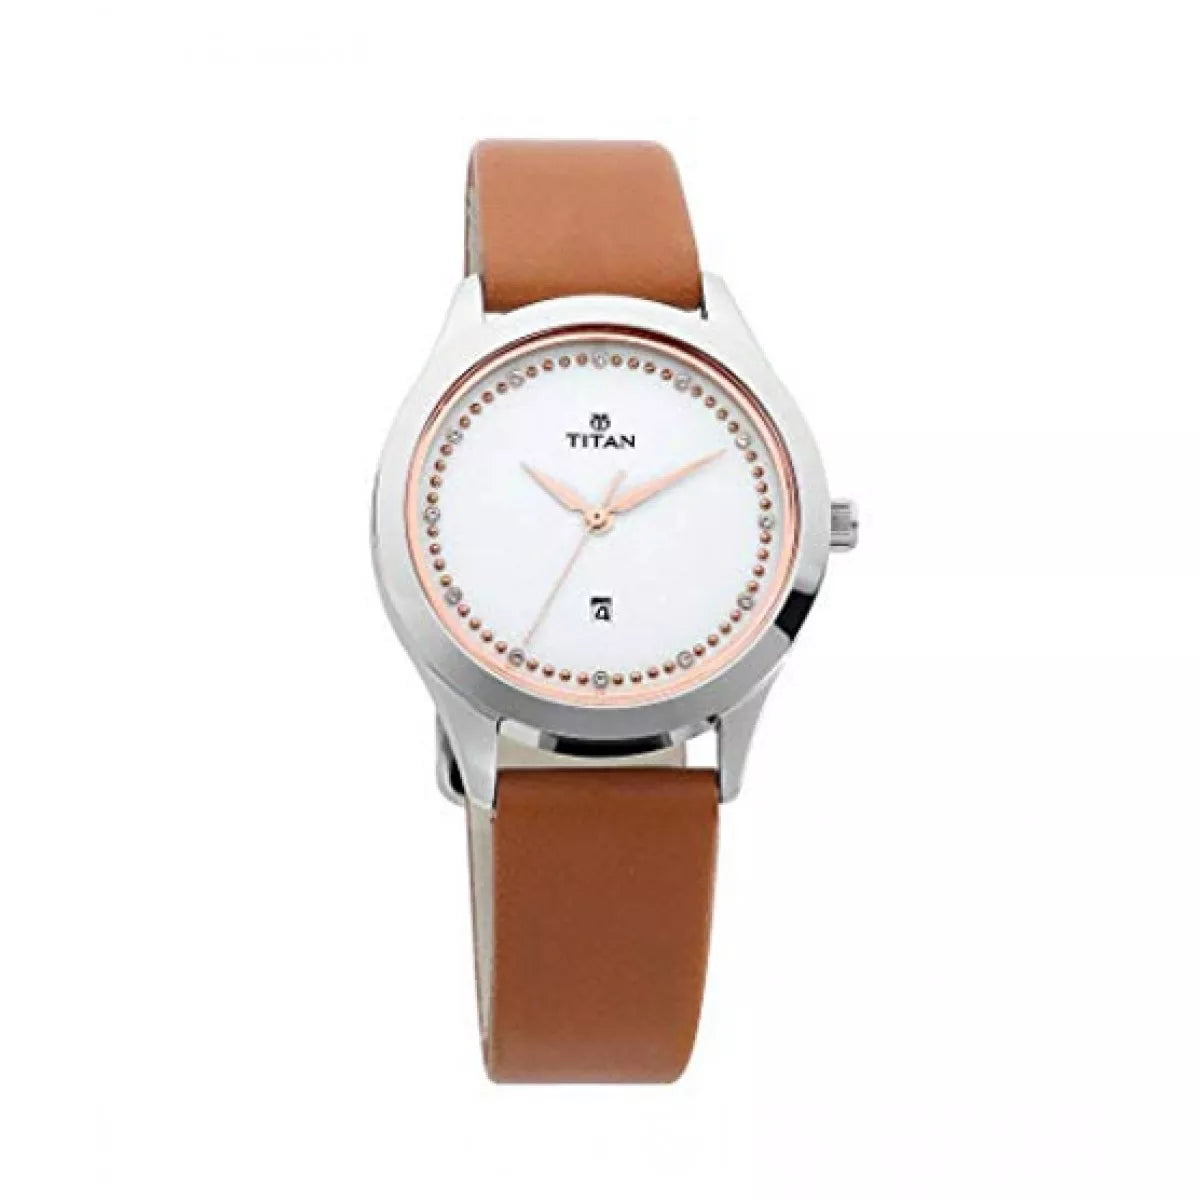 Titan Sparkle Women's Watch Brown 2570SL02 | Leather Band | Water-Resistant | Quartz Movement | Classic Style | Fashionable | Durable | Affordable | Halabh.com